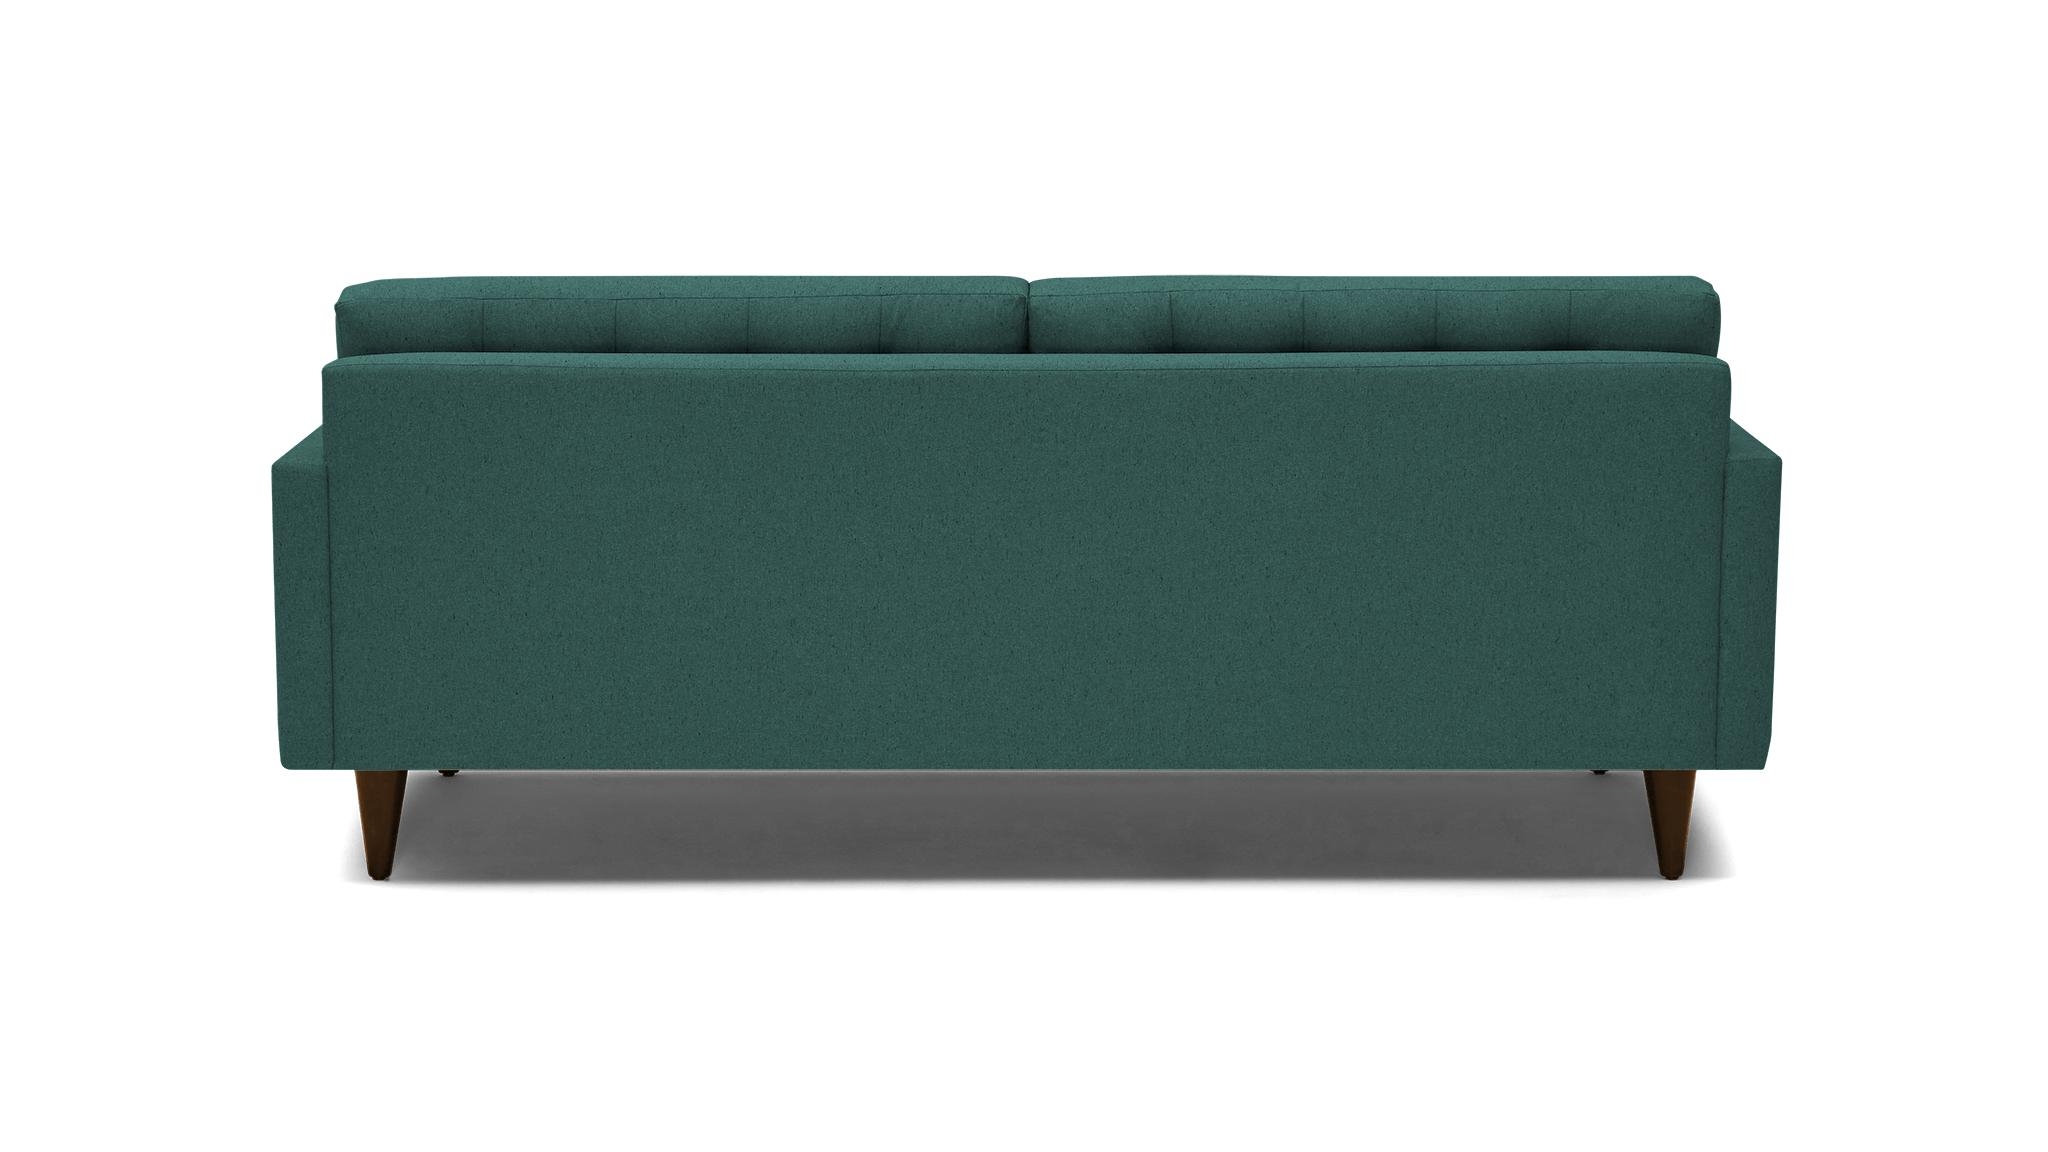 Blue Eliot Mid Century Modern Sofa - Prime Peacock - Mocha - Image 4